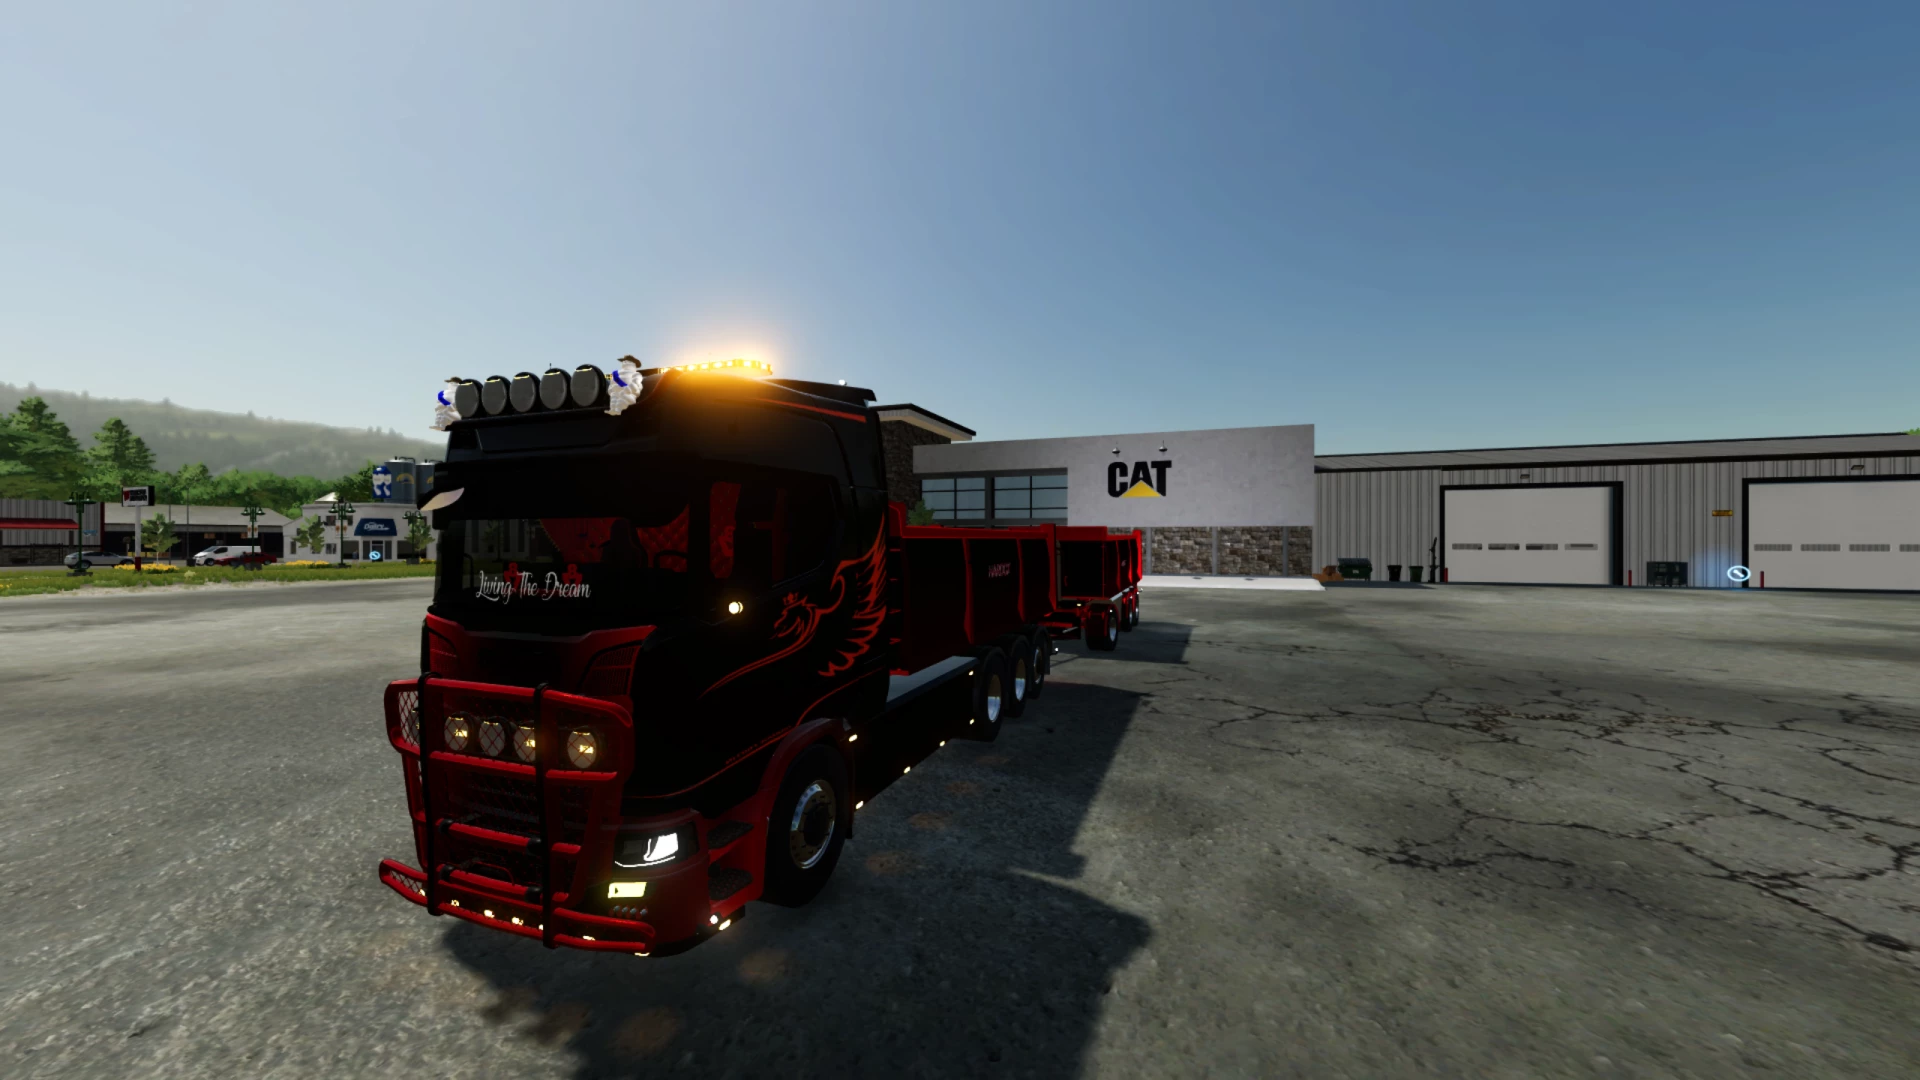 My Scania S730 Dump Truck